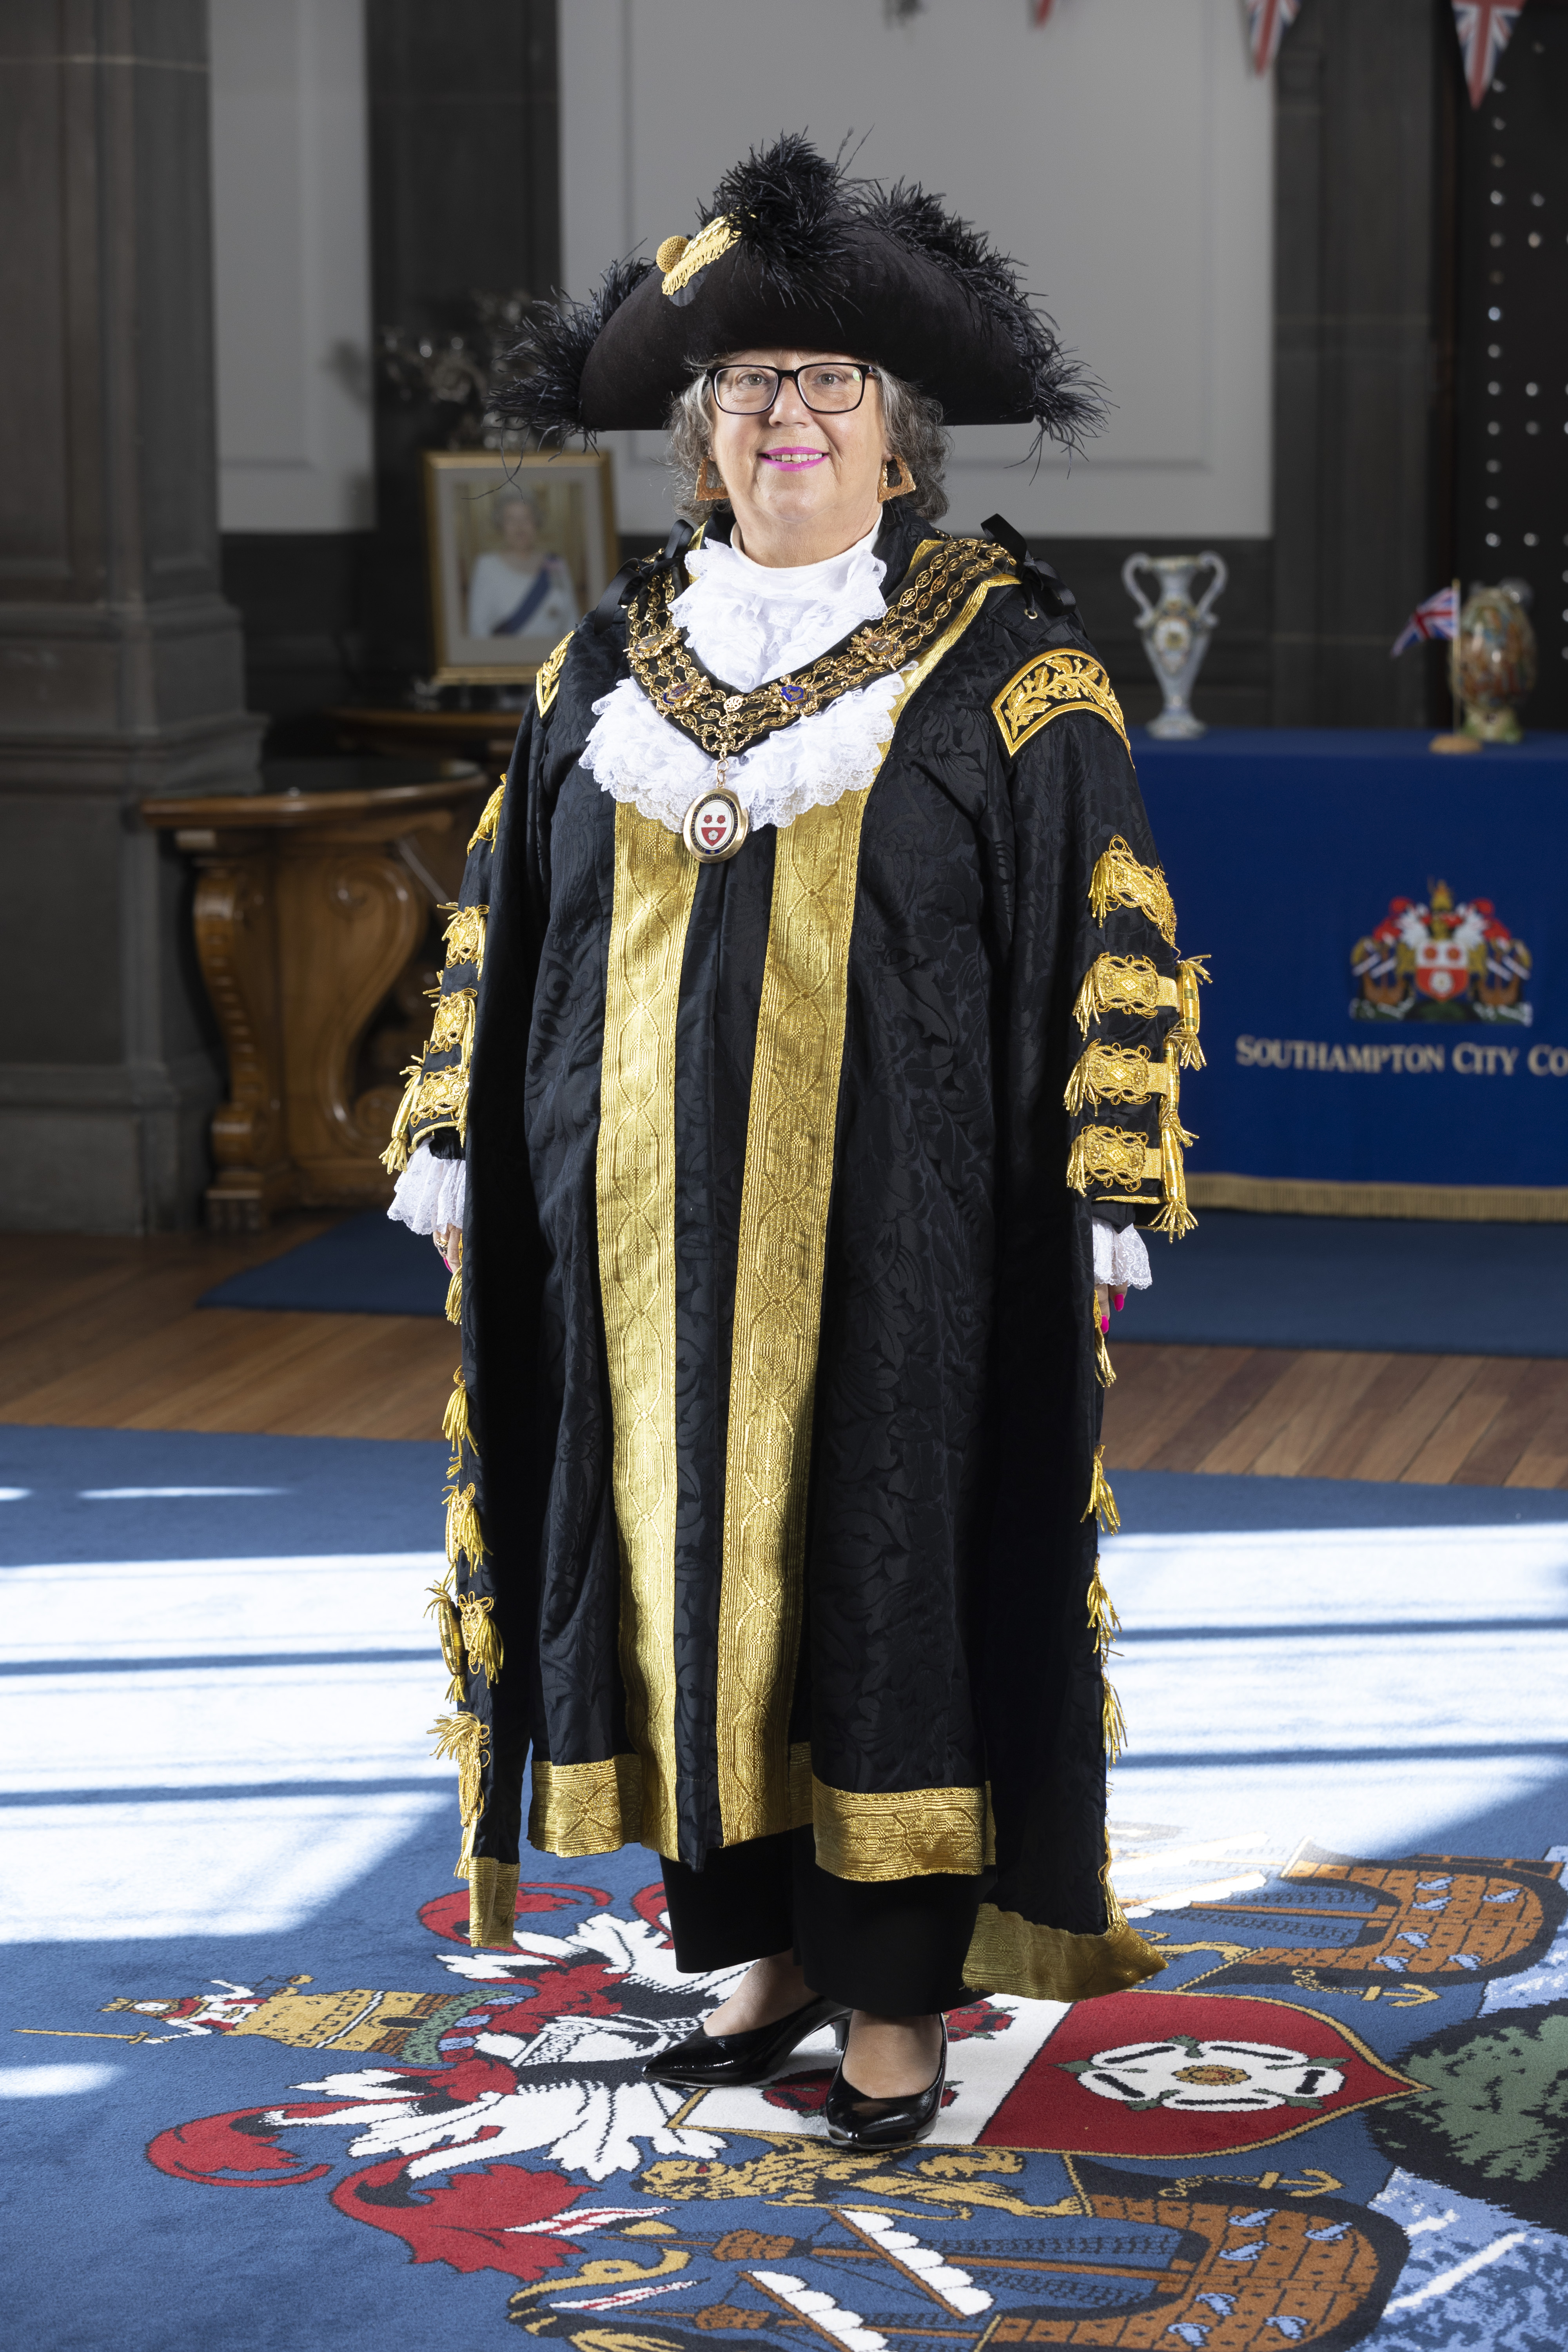 Lord Mayor